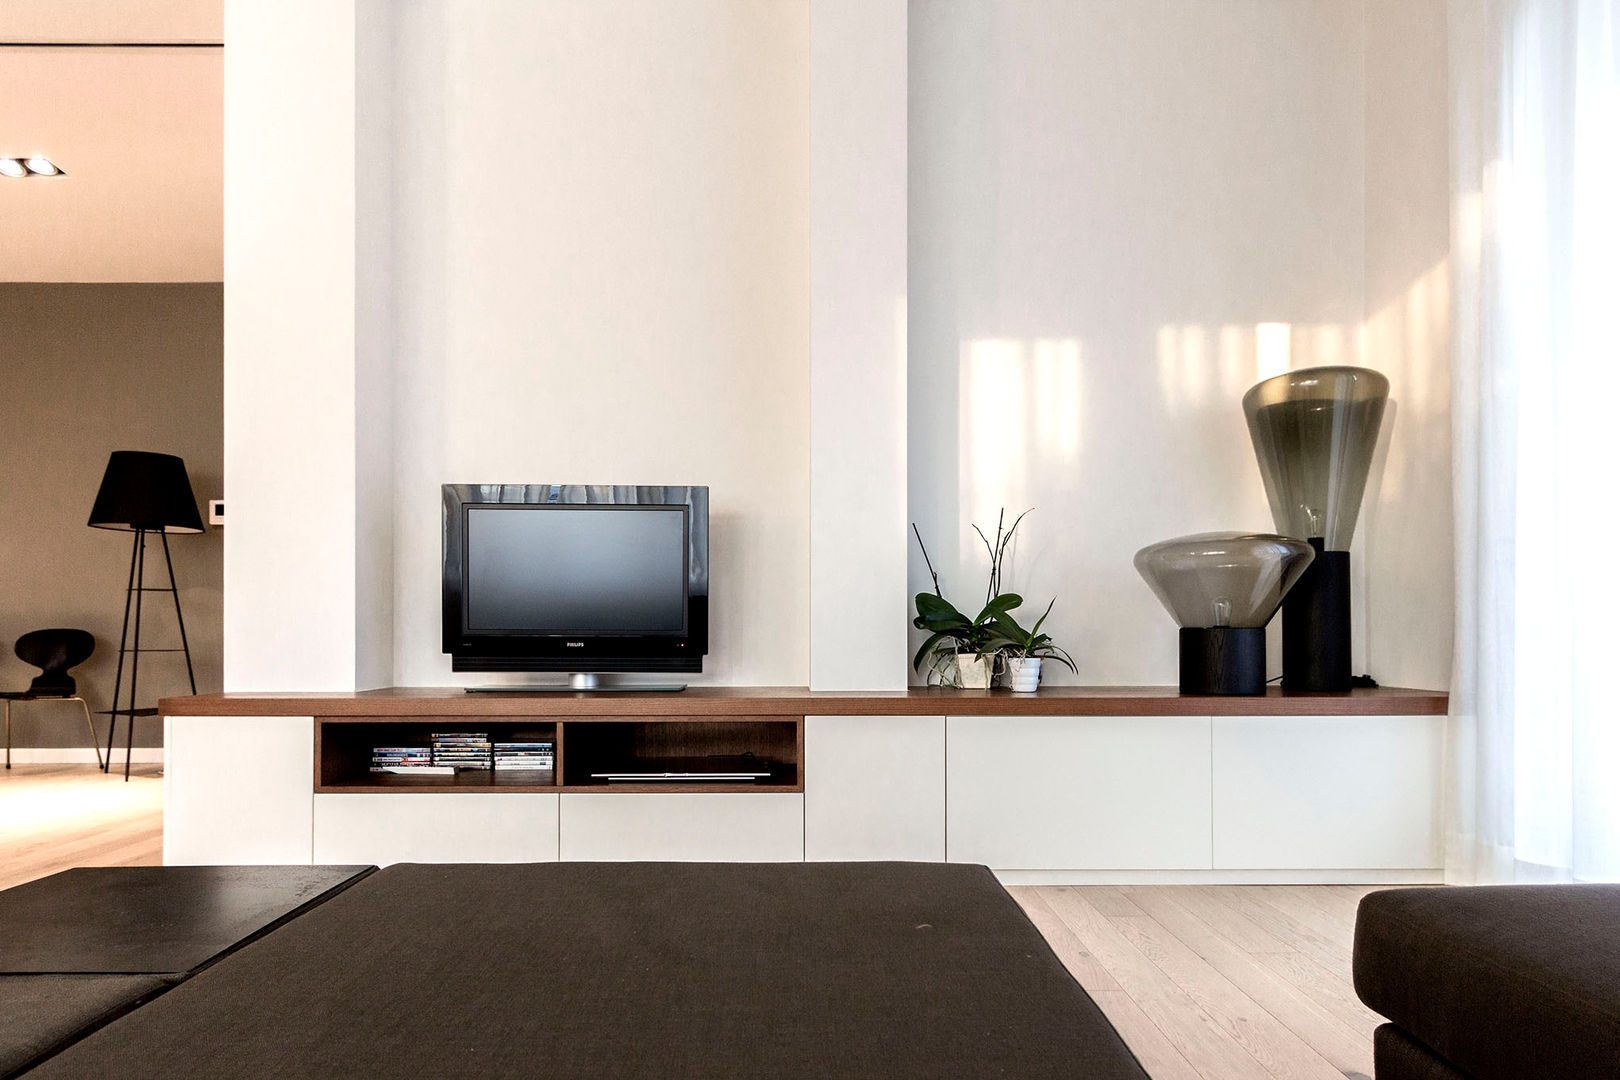 Appartamento Residenziale - Cernobbio 2015, Galleria del Vento Galleria del Vento Livings de estilo moderno